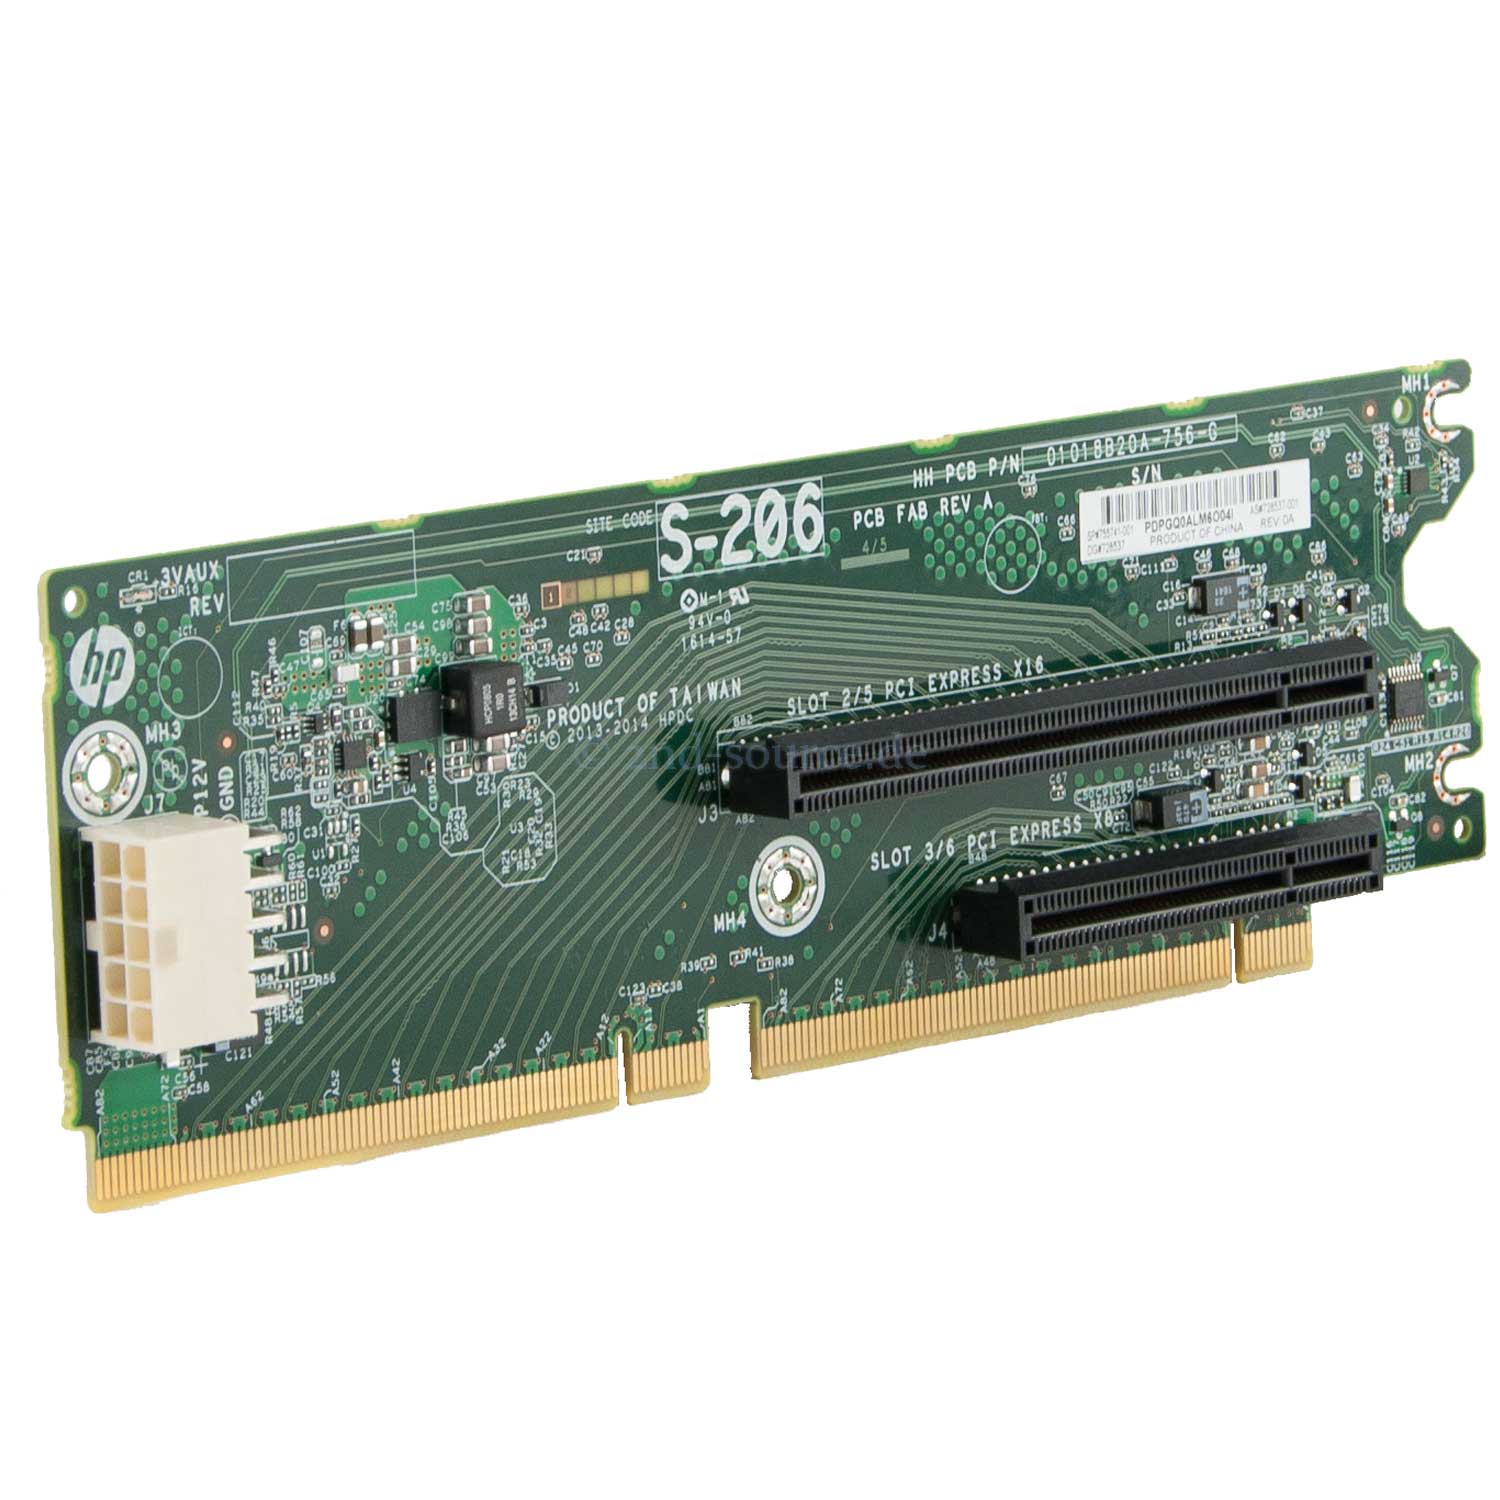 HPE PCI Board 2 slot x16 x8 DL380p G8 755741-001